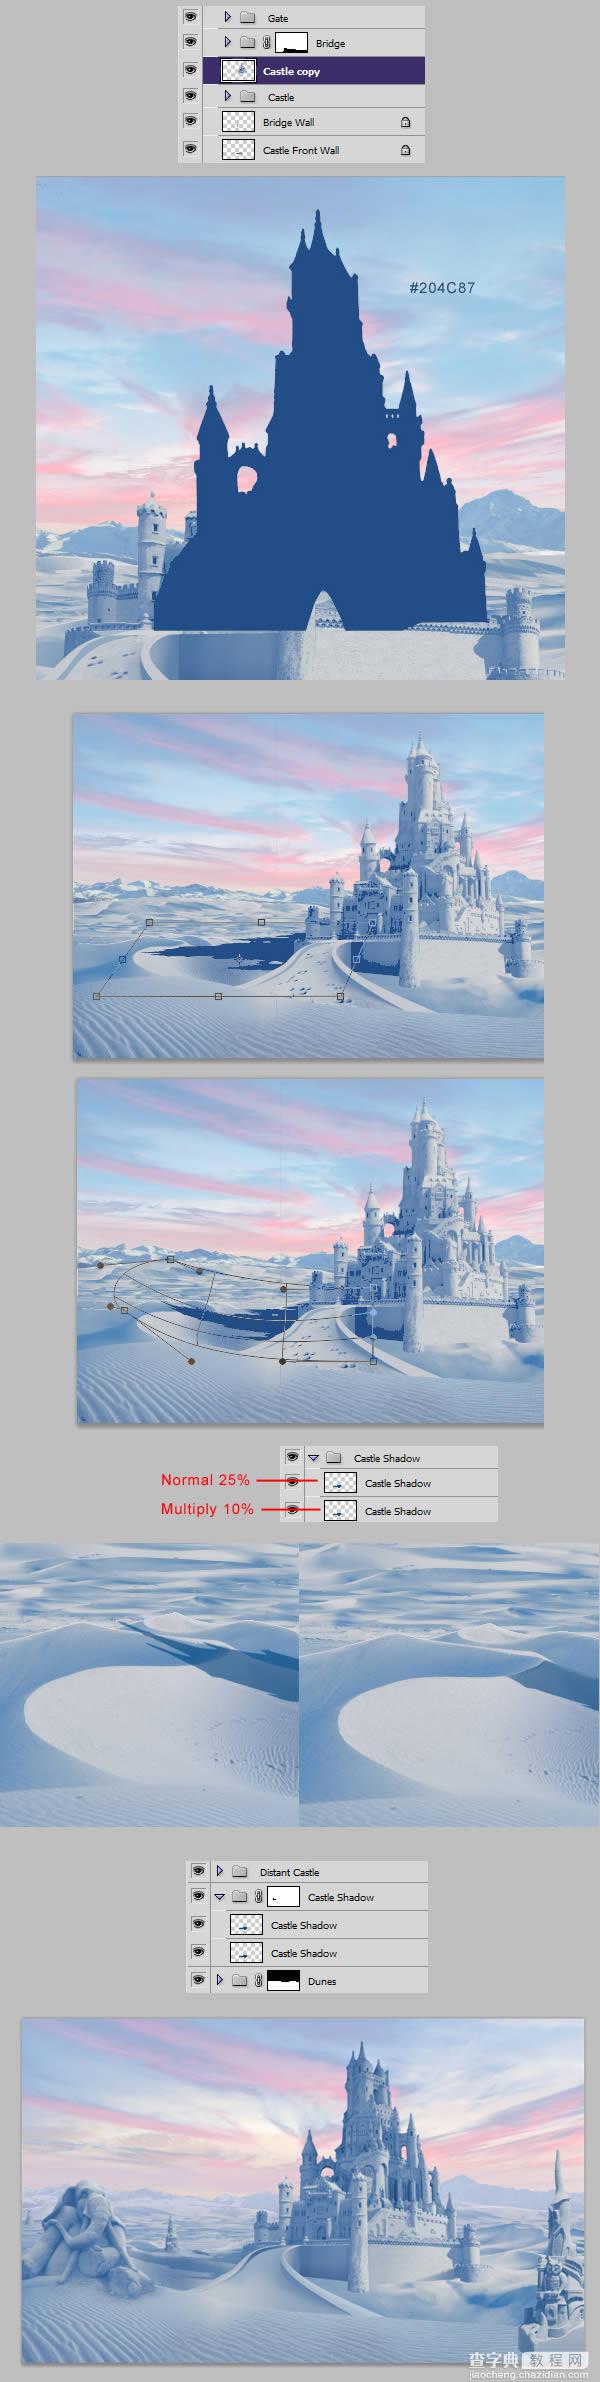 photoshop将荒漠场景打造出迪士尼风格的雪景图61